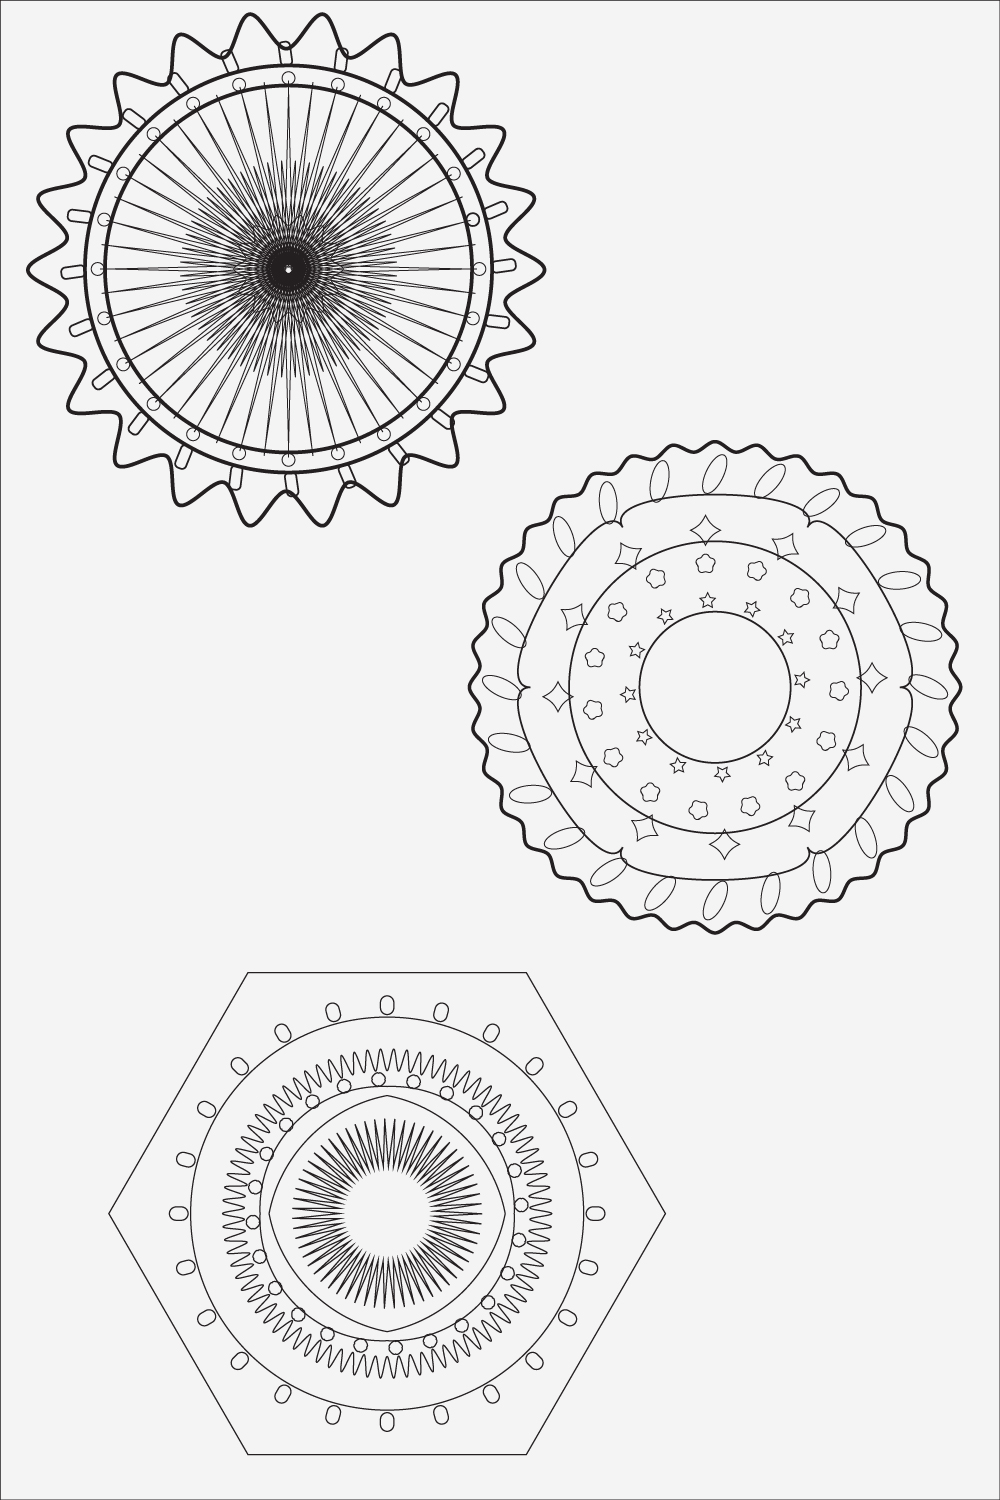 Mandala Art Design - pinterest image preview.